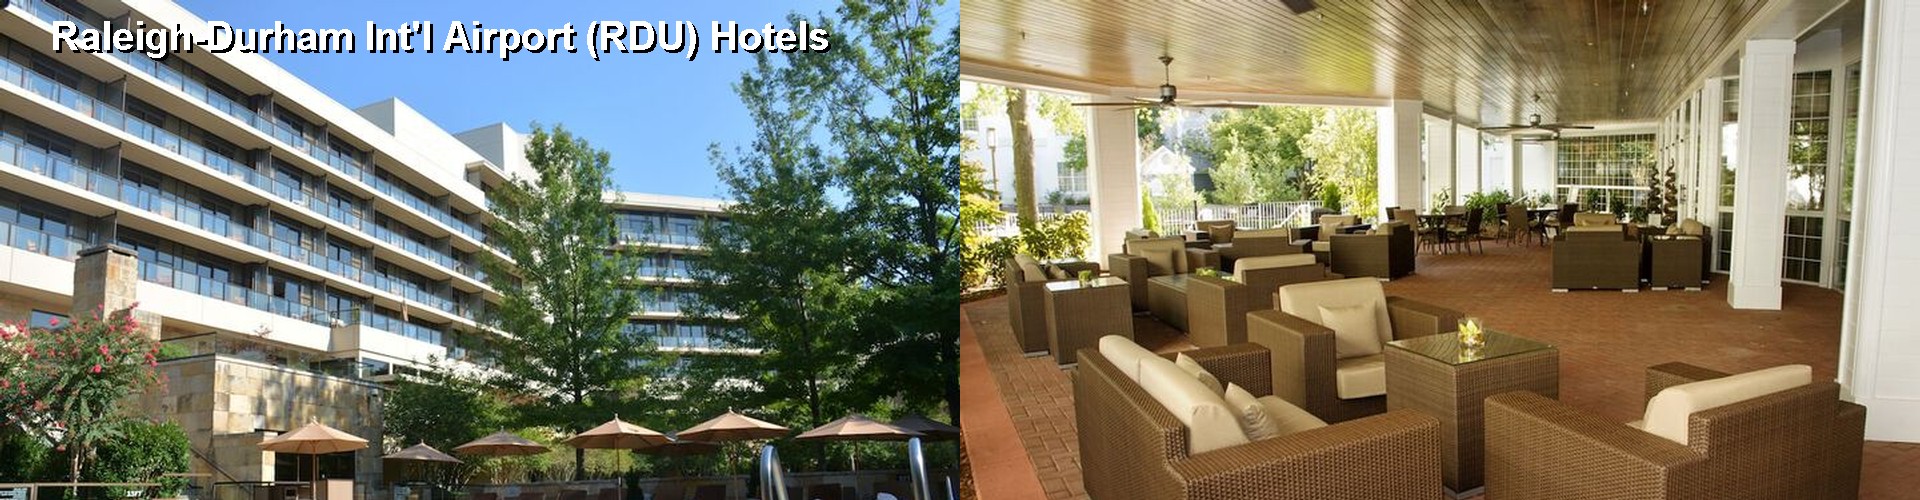 5 Best Hotels near Raleigh-Durham Int'l Airport (RDU)